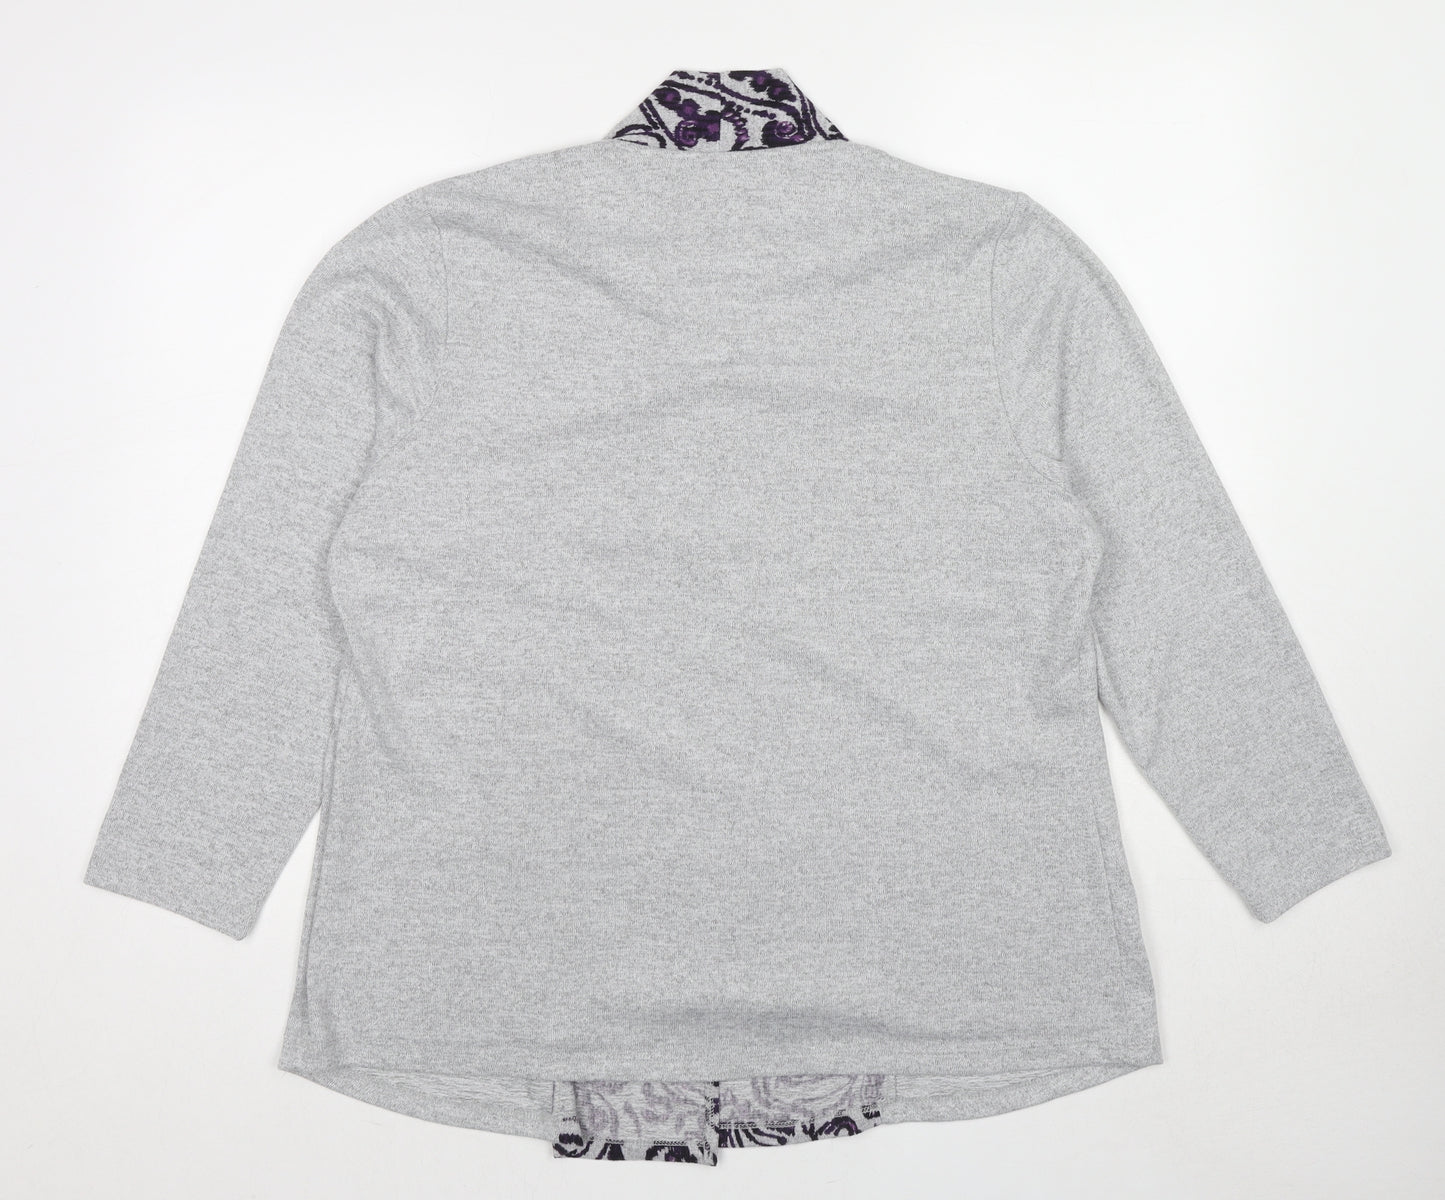 TIGI Womens Grey V-Neck Polyester Pullover Jumper Size 18 - Size 18-20 Cardigan Effect